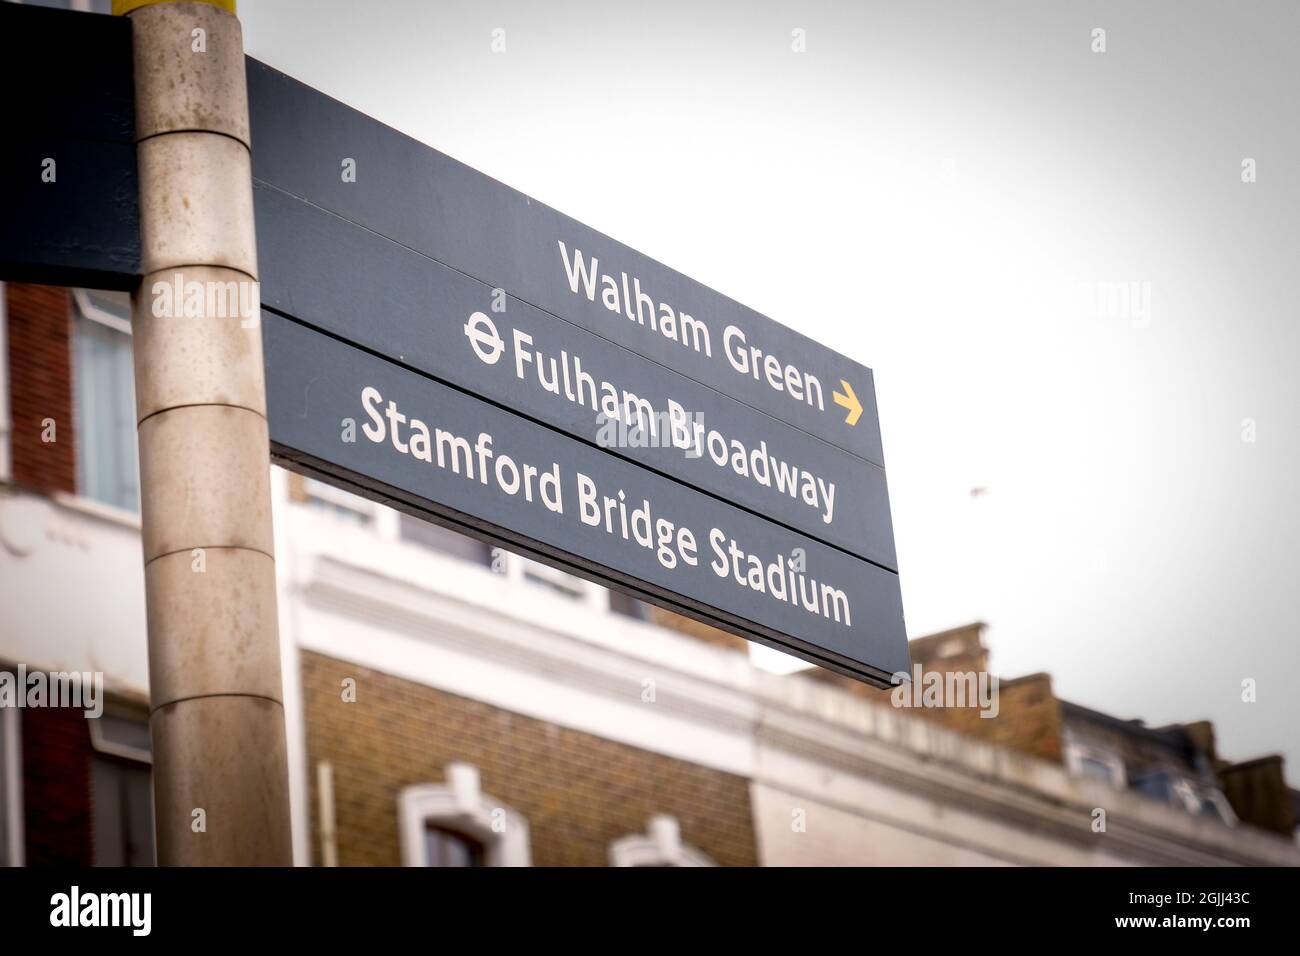 London, September 2021: Street direction sign for Walham Green, Fulham Broadway and Chelsea FC's Stamford Bridge Stadium Stock Photo